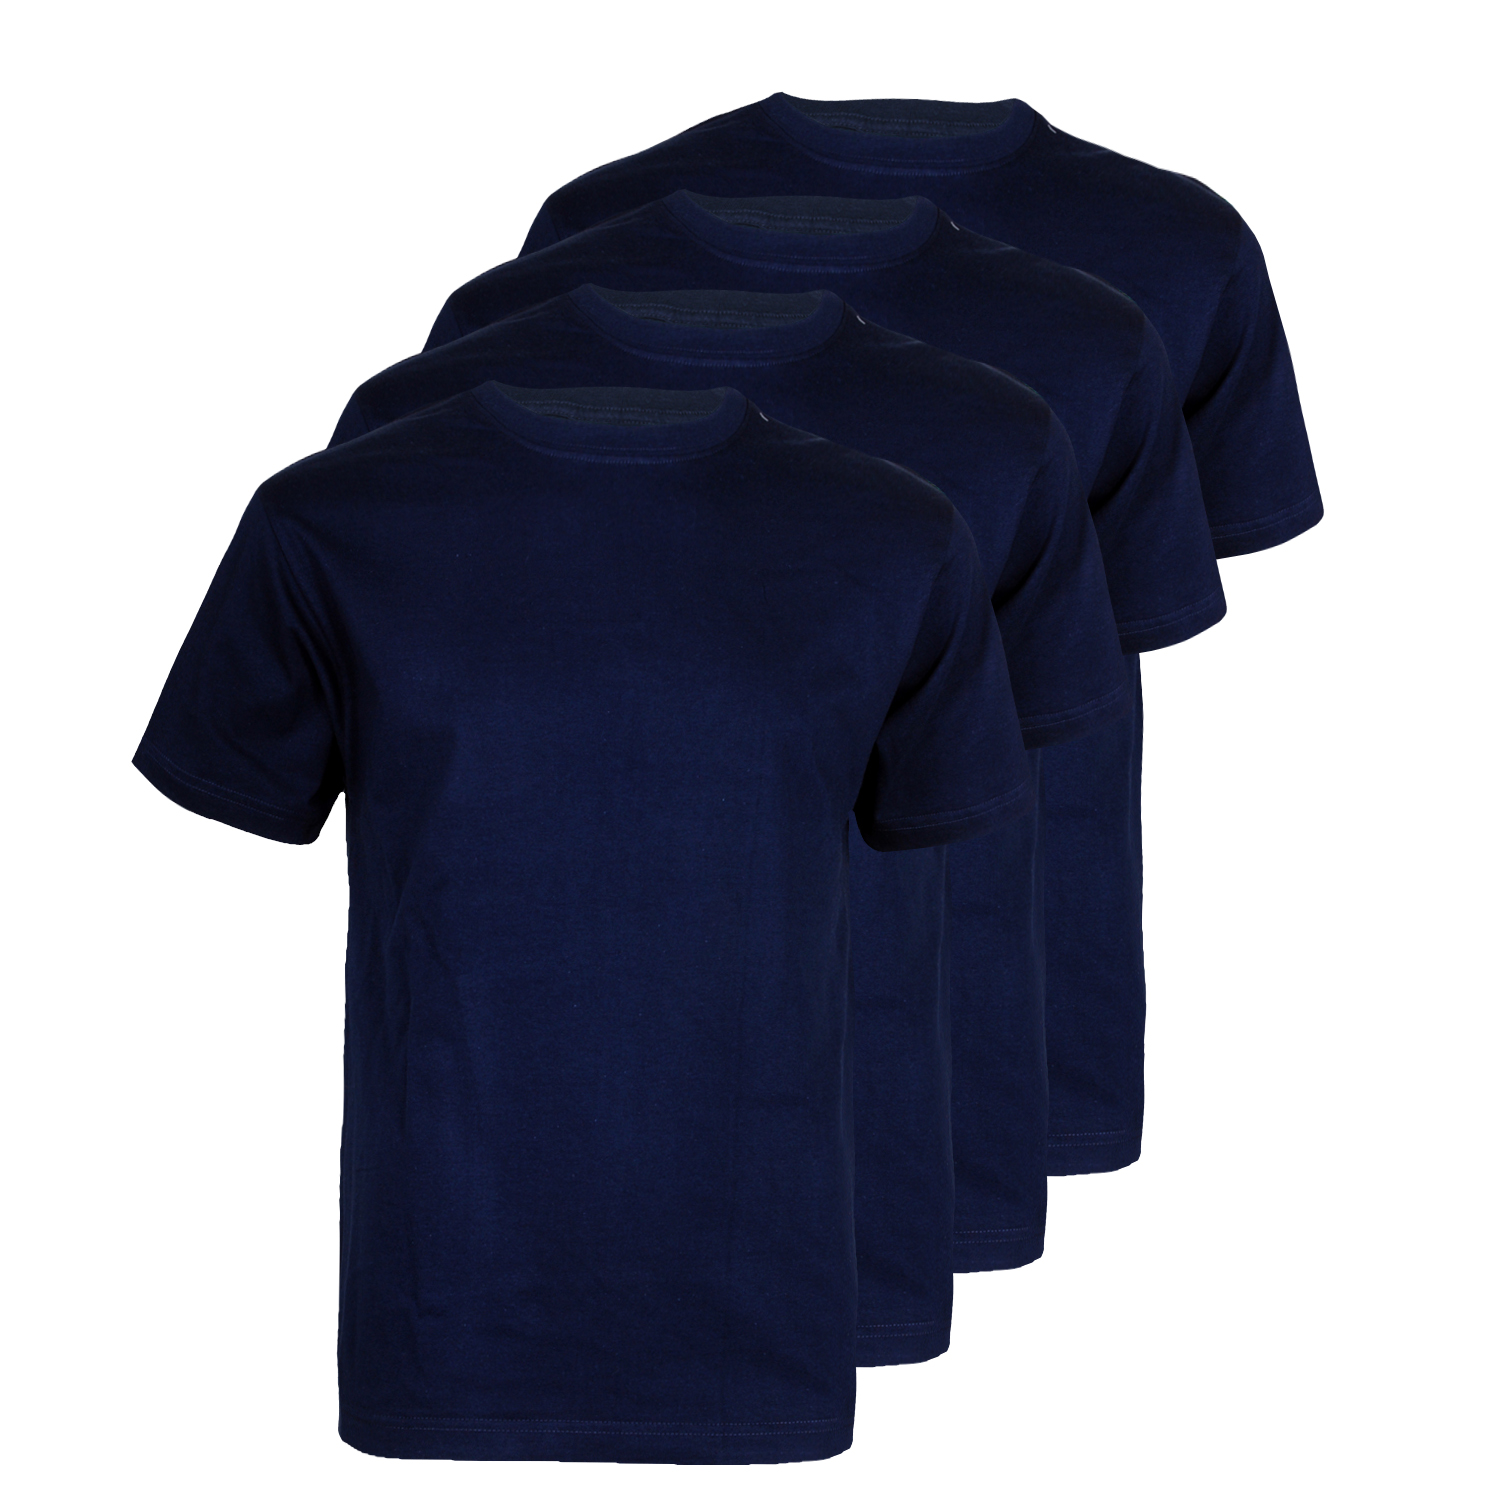 Shmack Basic Blank (4er Pack) T-shirt Navy 89485 at Hoodboyz